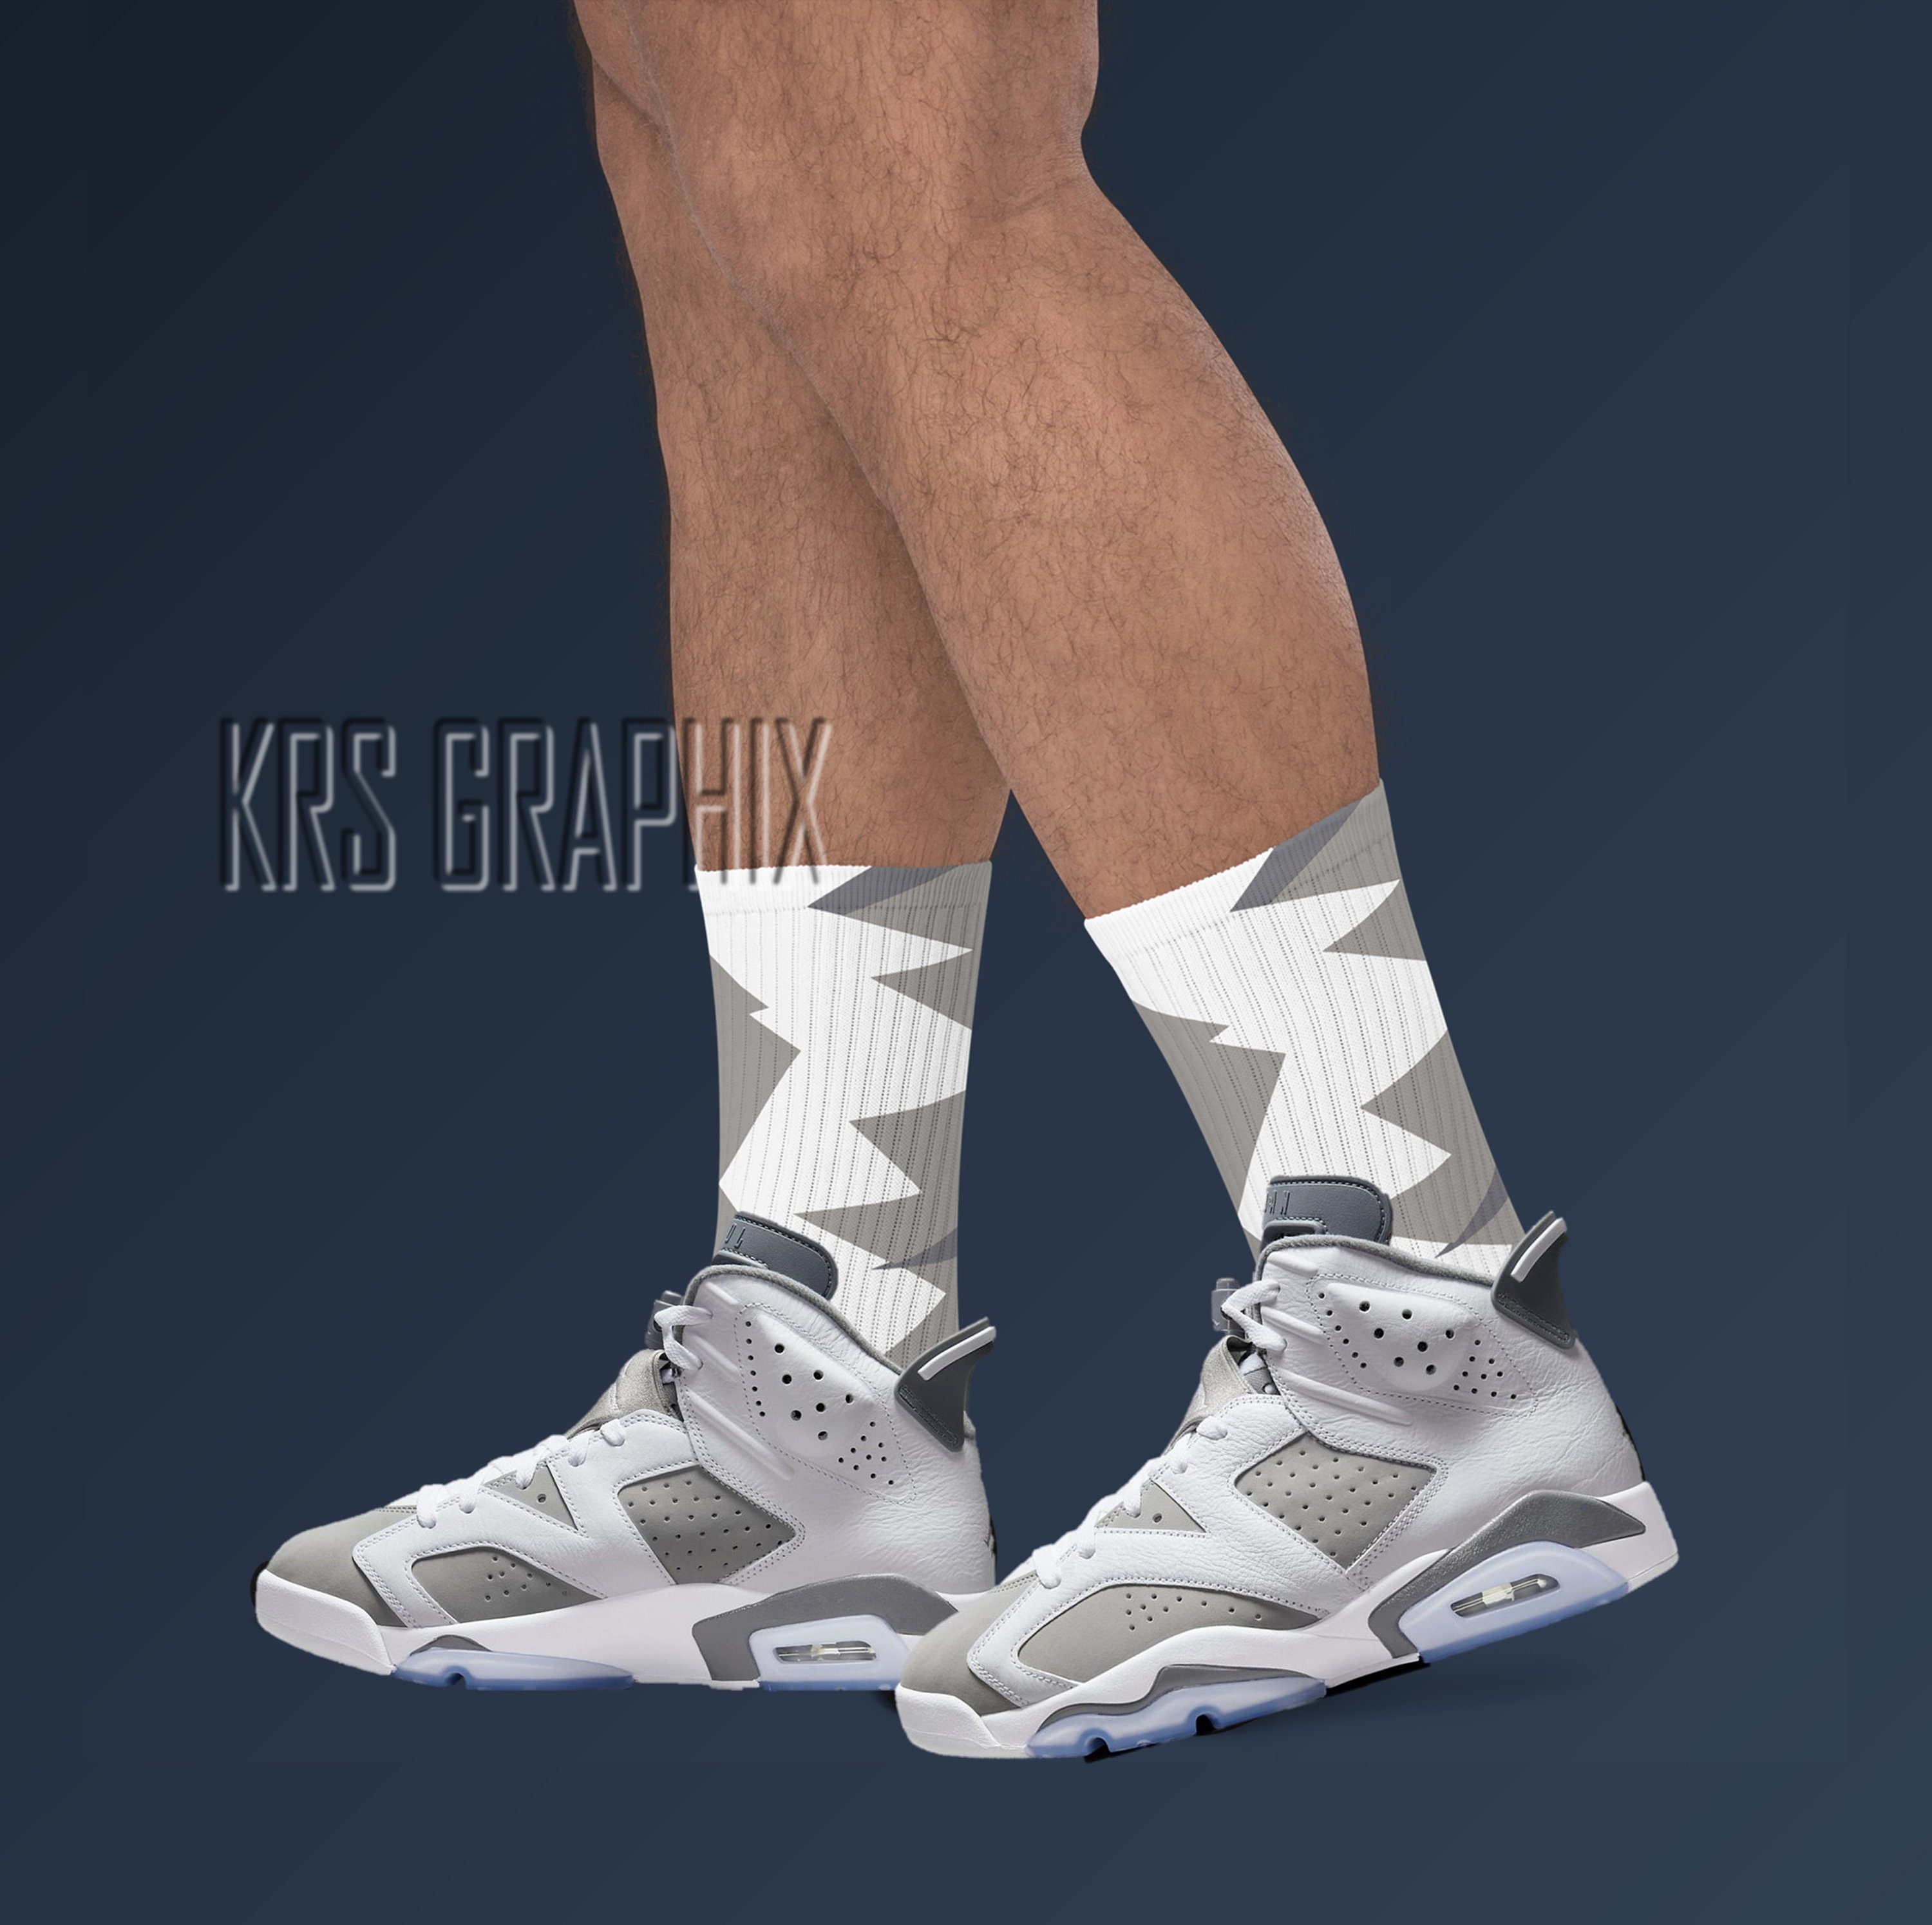 cool grey jordan socks